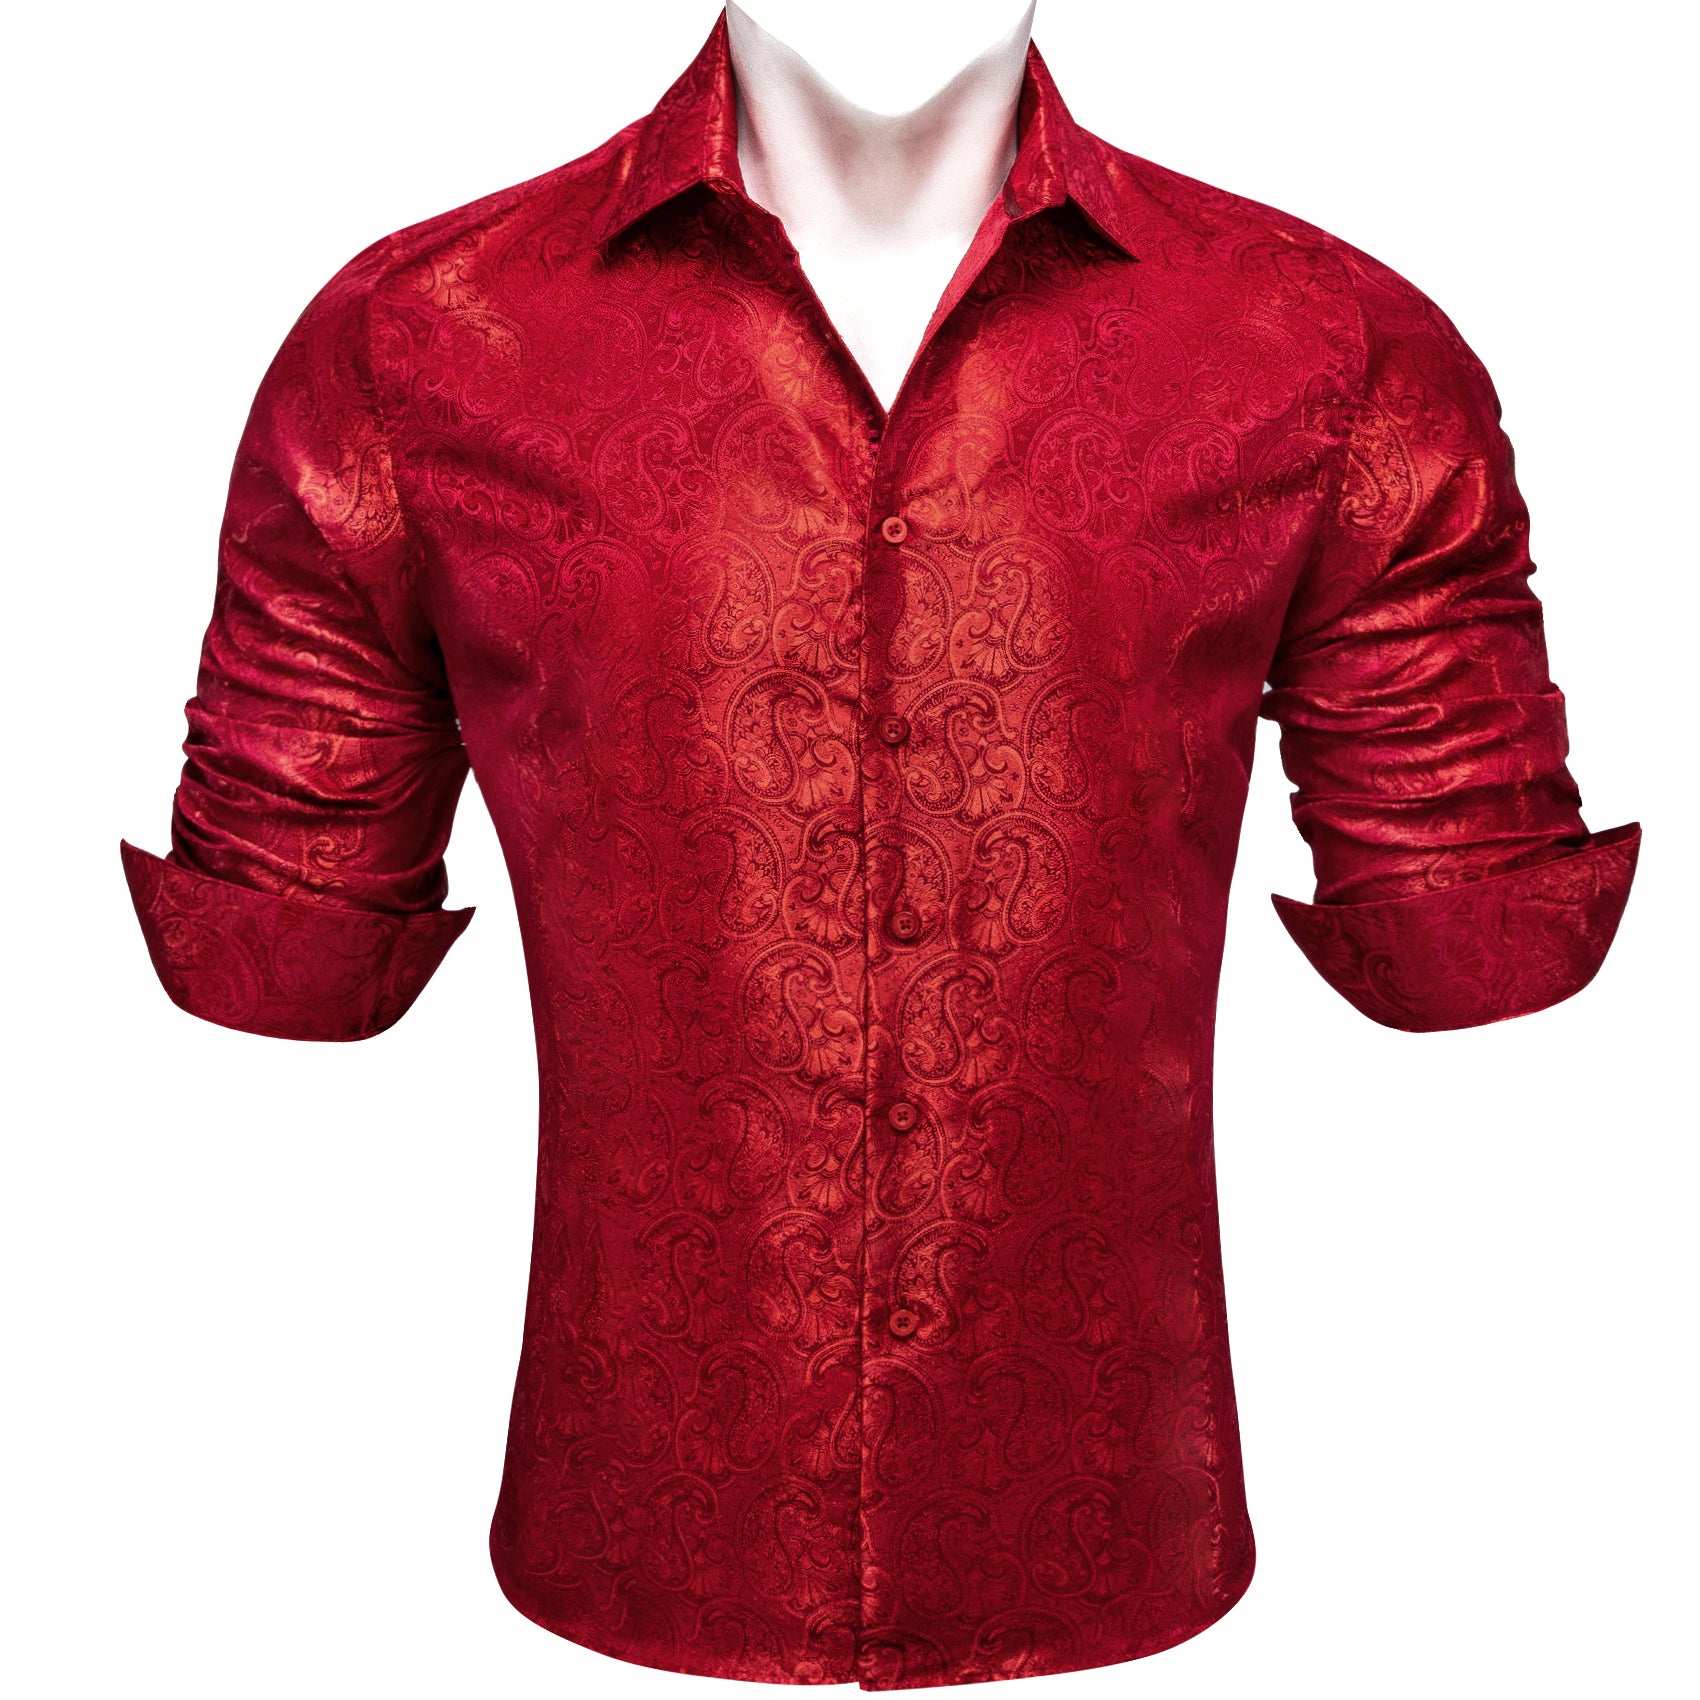 Barry.wang Strong Red Paisley Silk Men's Shirt